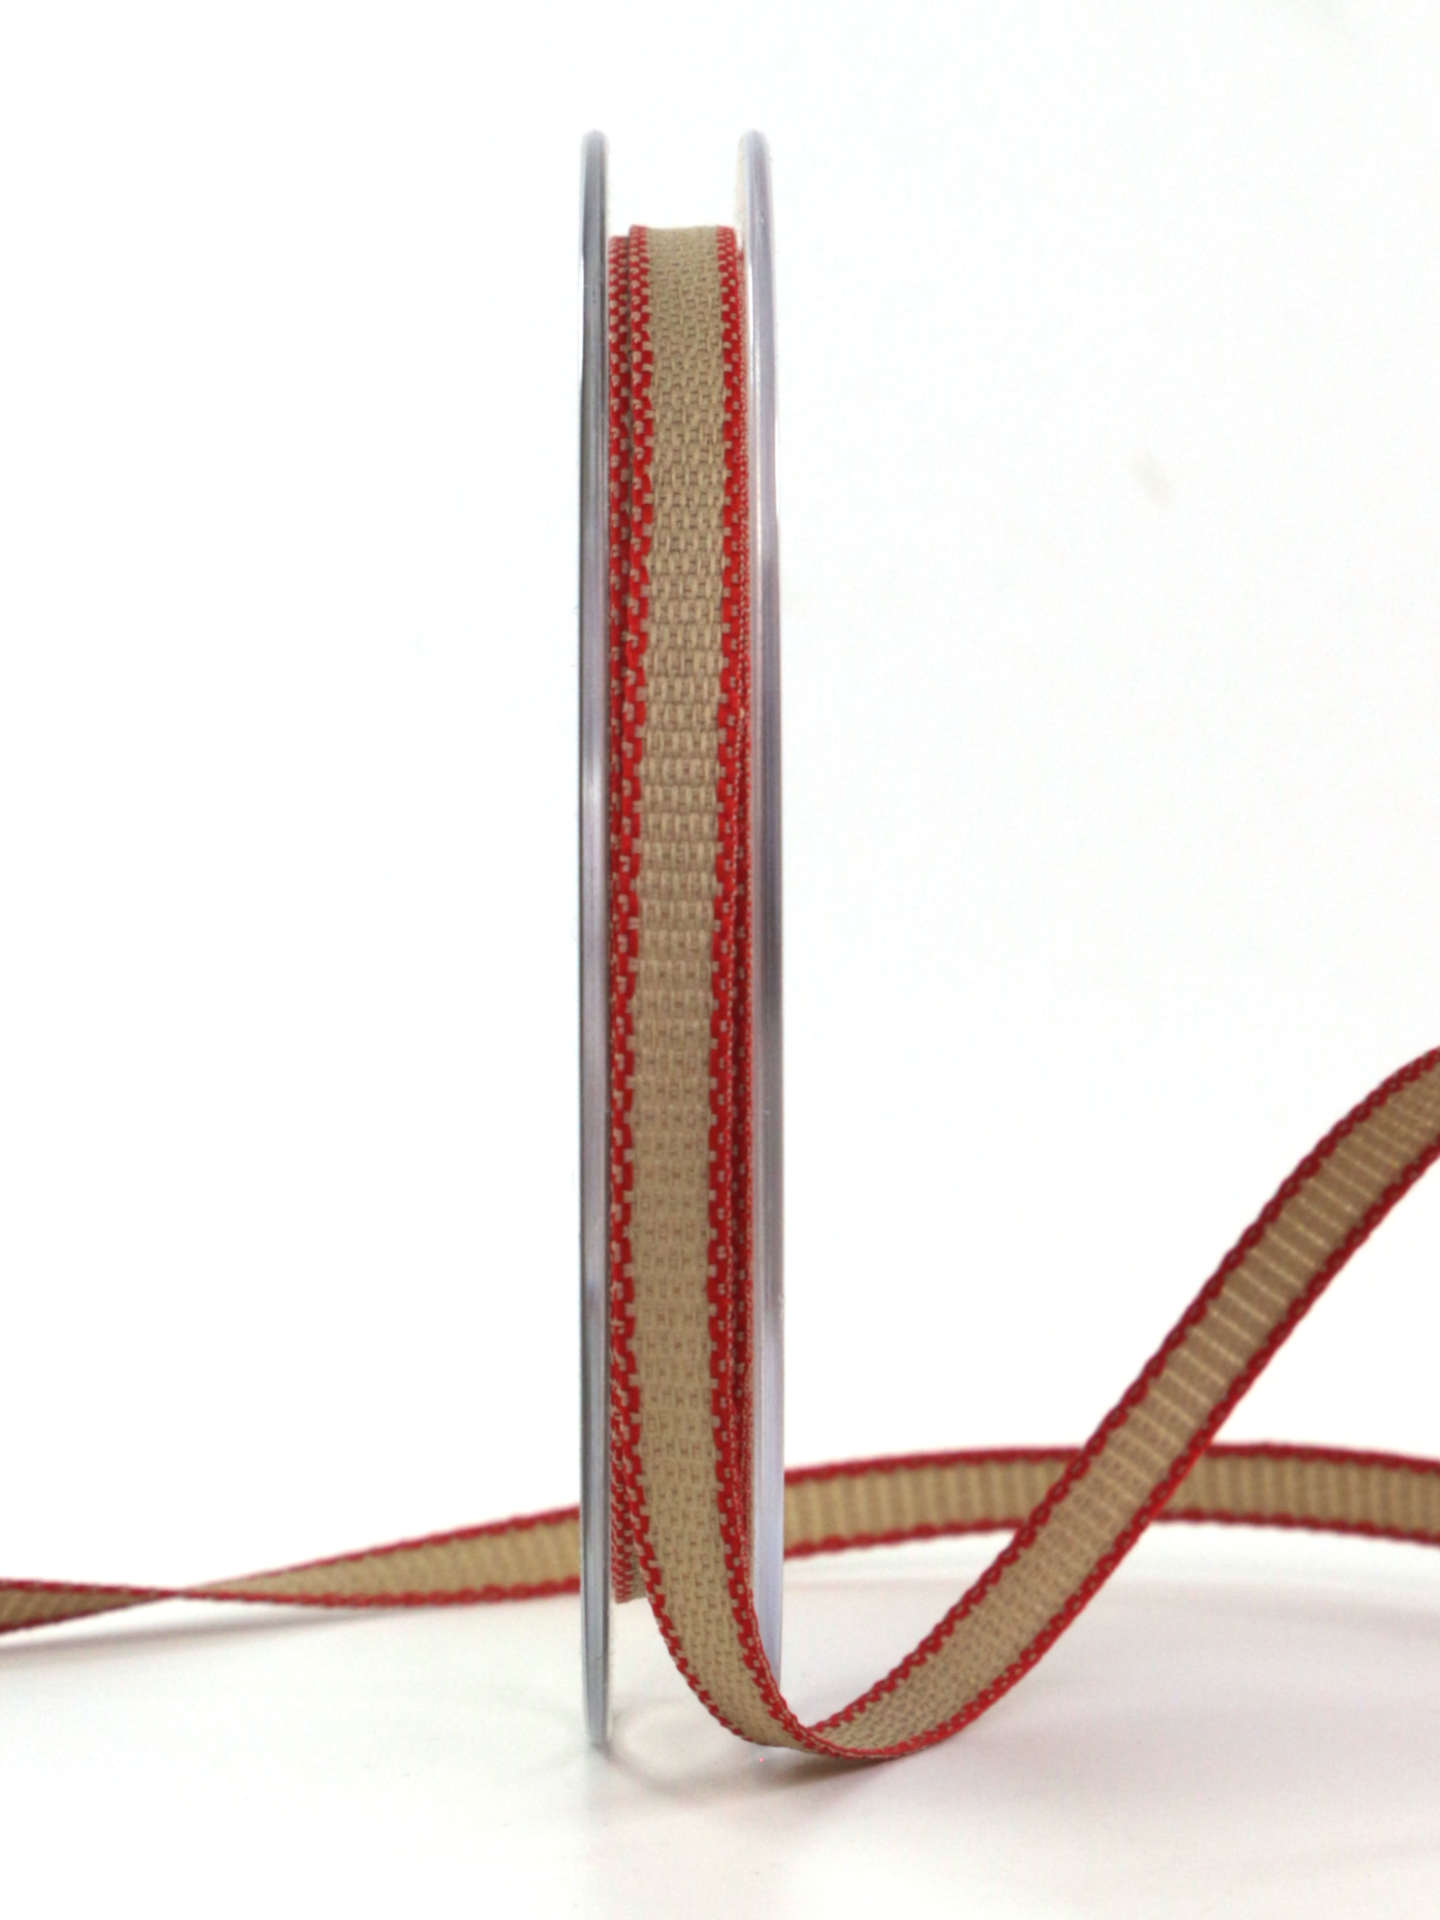 Leinenband, waschbar, rot, 7 mm breit, 15 m Rolle - geschenkband, geschenkband-einfarbig